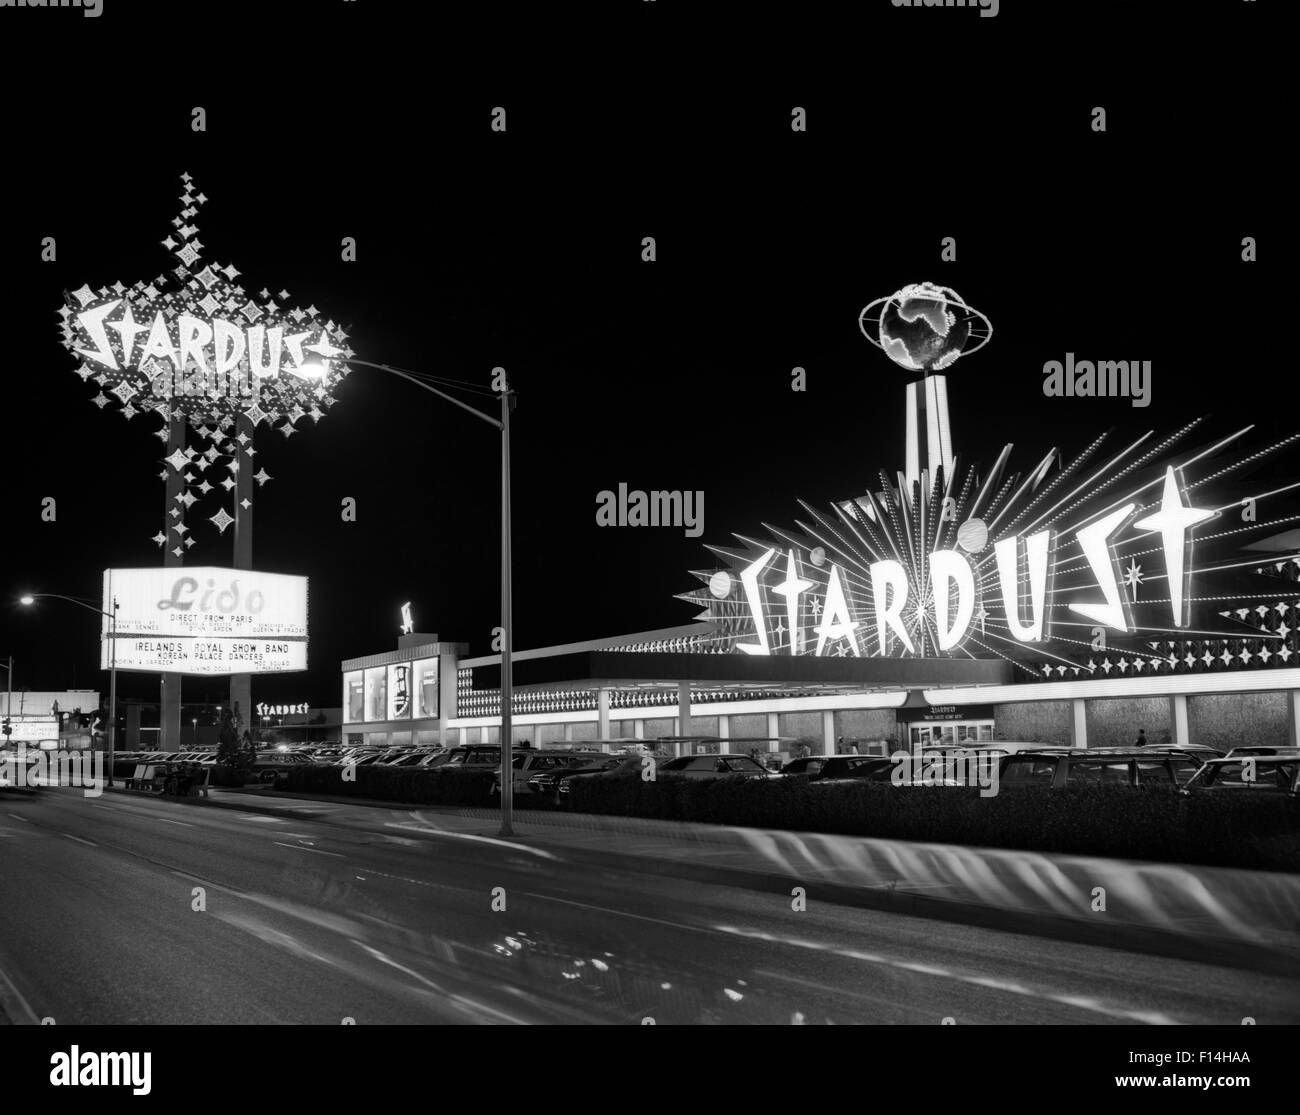 Legendary Casino Makes its Las Vegas Strip Debut - TheStreet